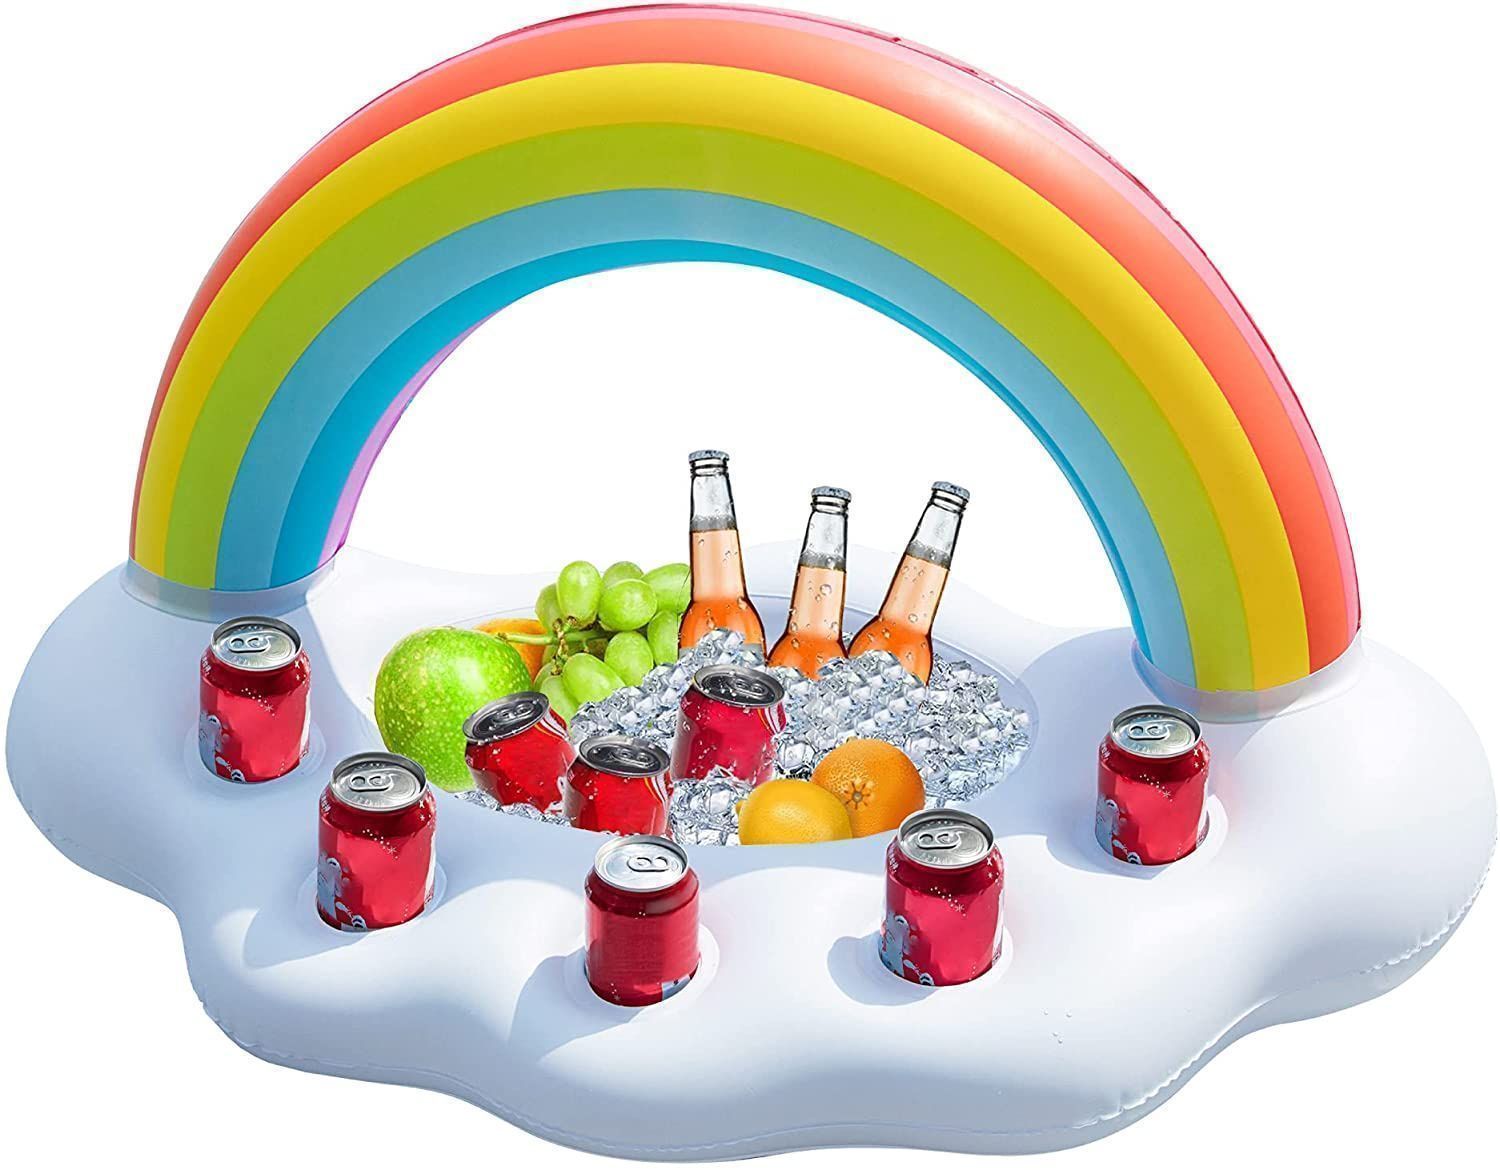 TESTMedline Inflatable Rainbow Cloud Drink Holder